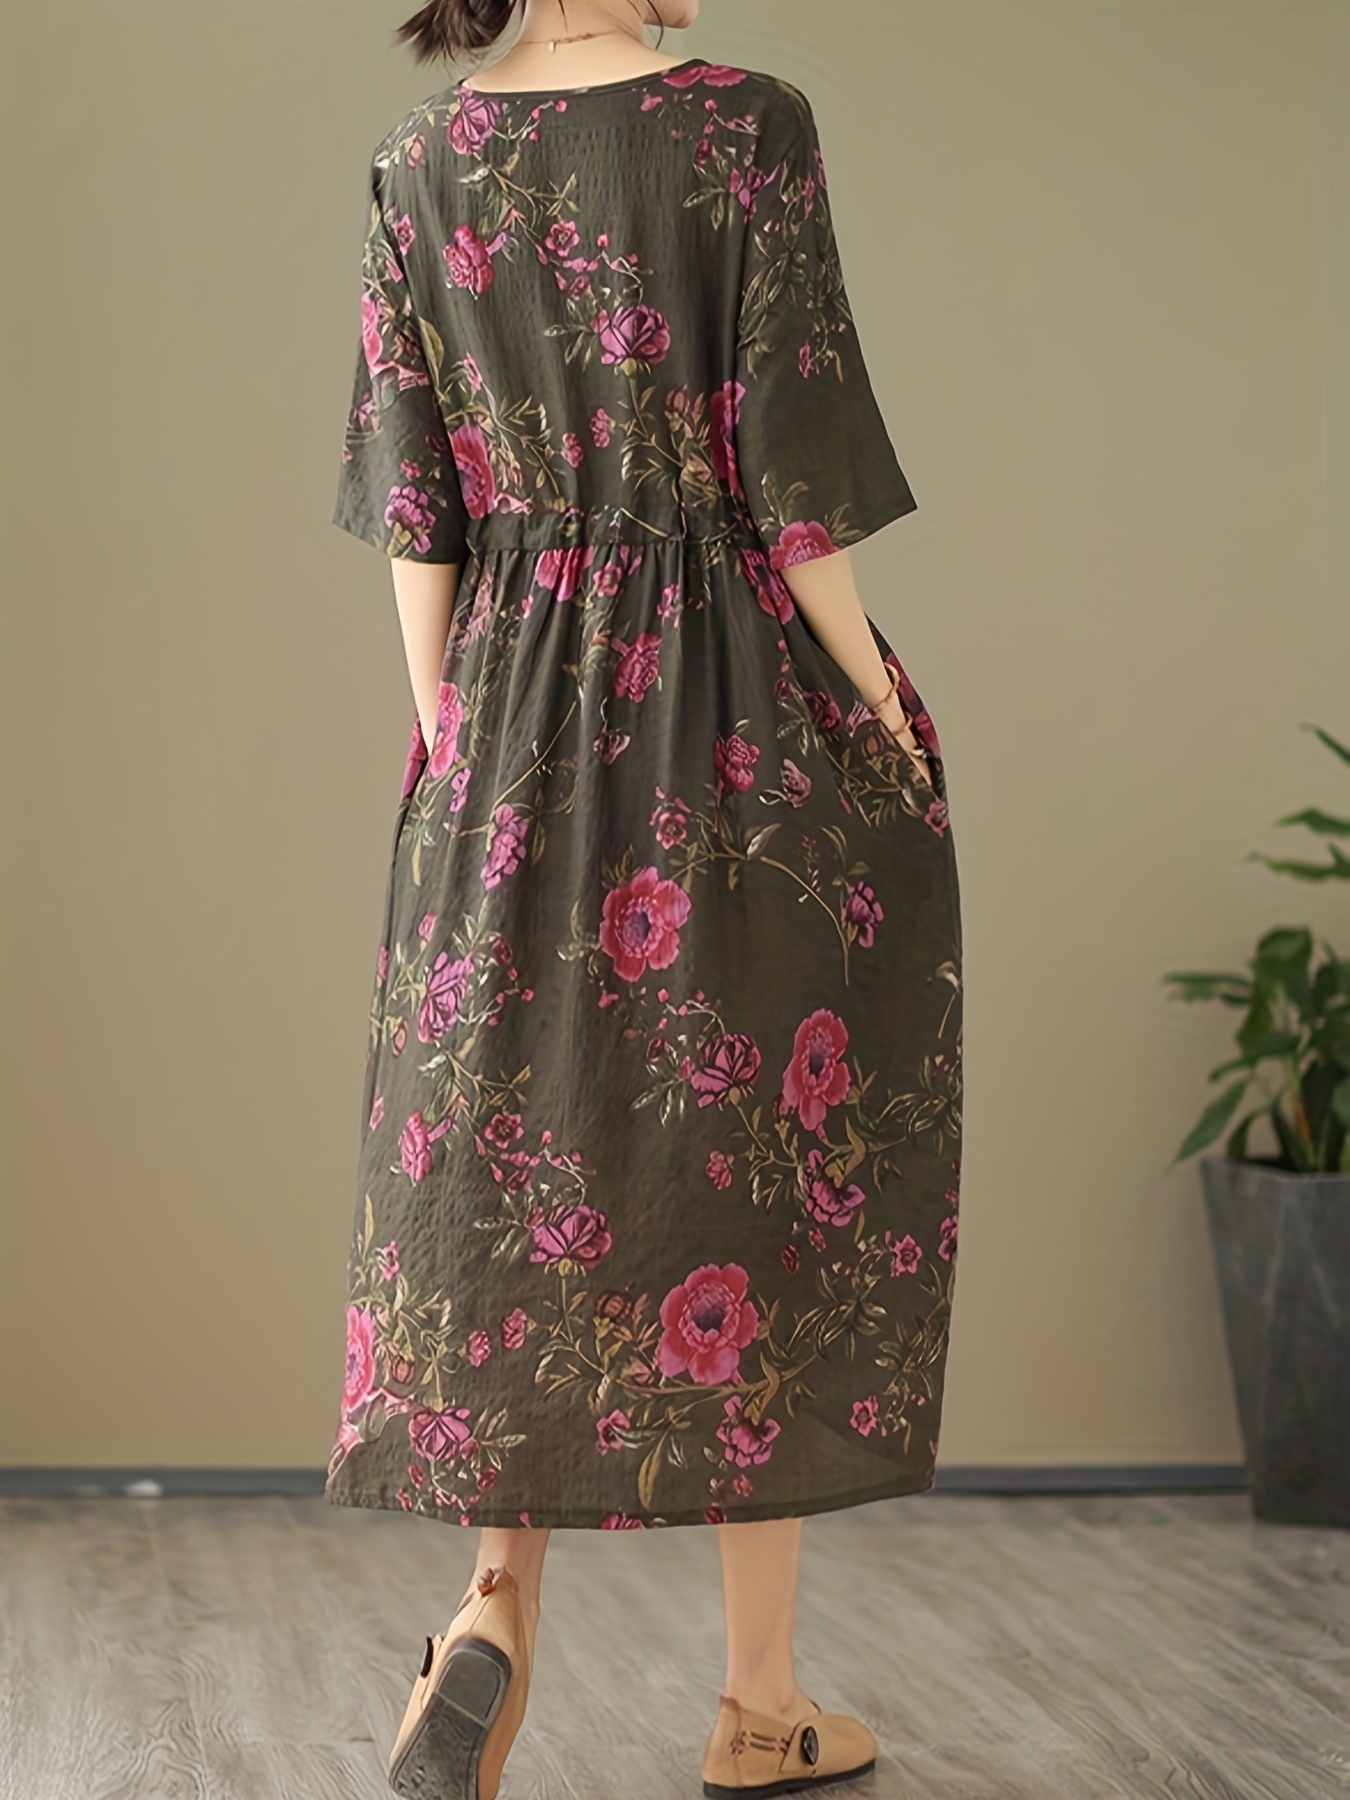 floral print v neck dress vintage half sleeve ruched maxi dress womens clothing